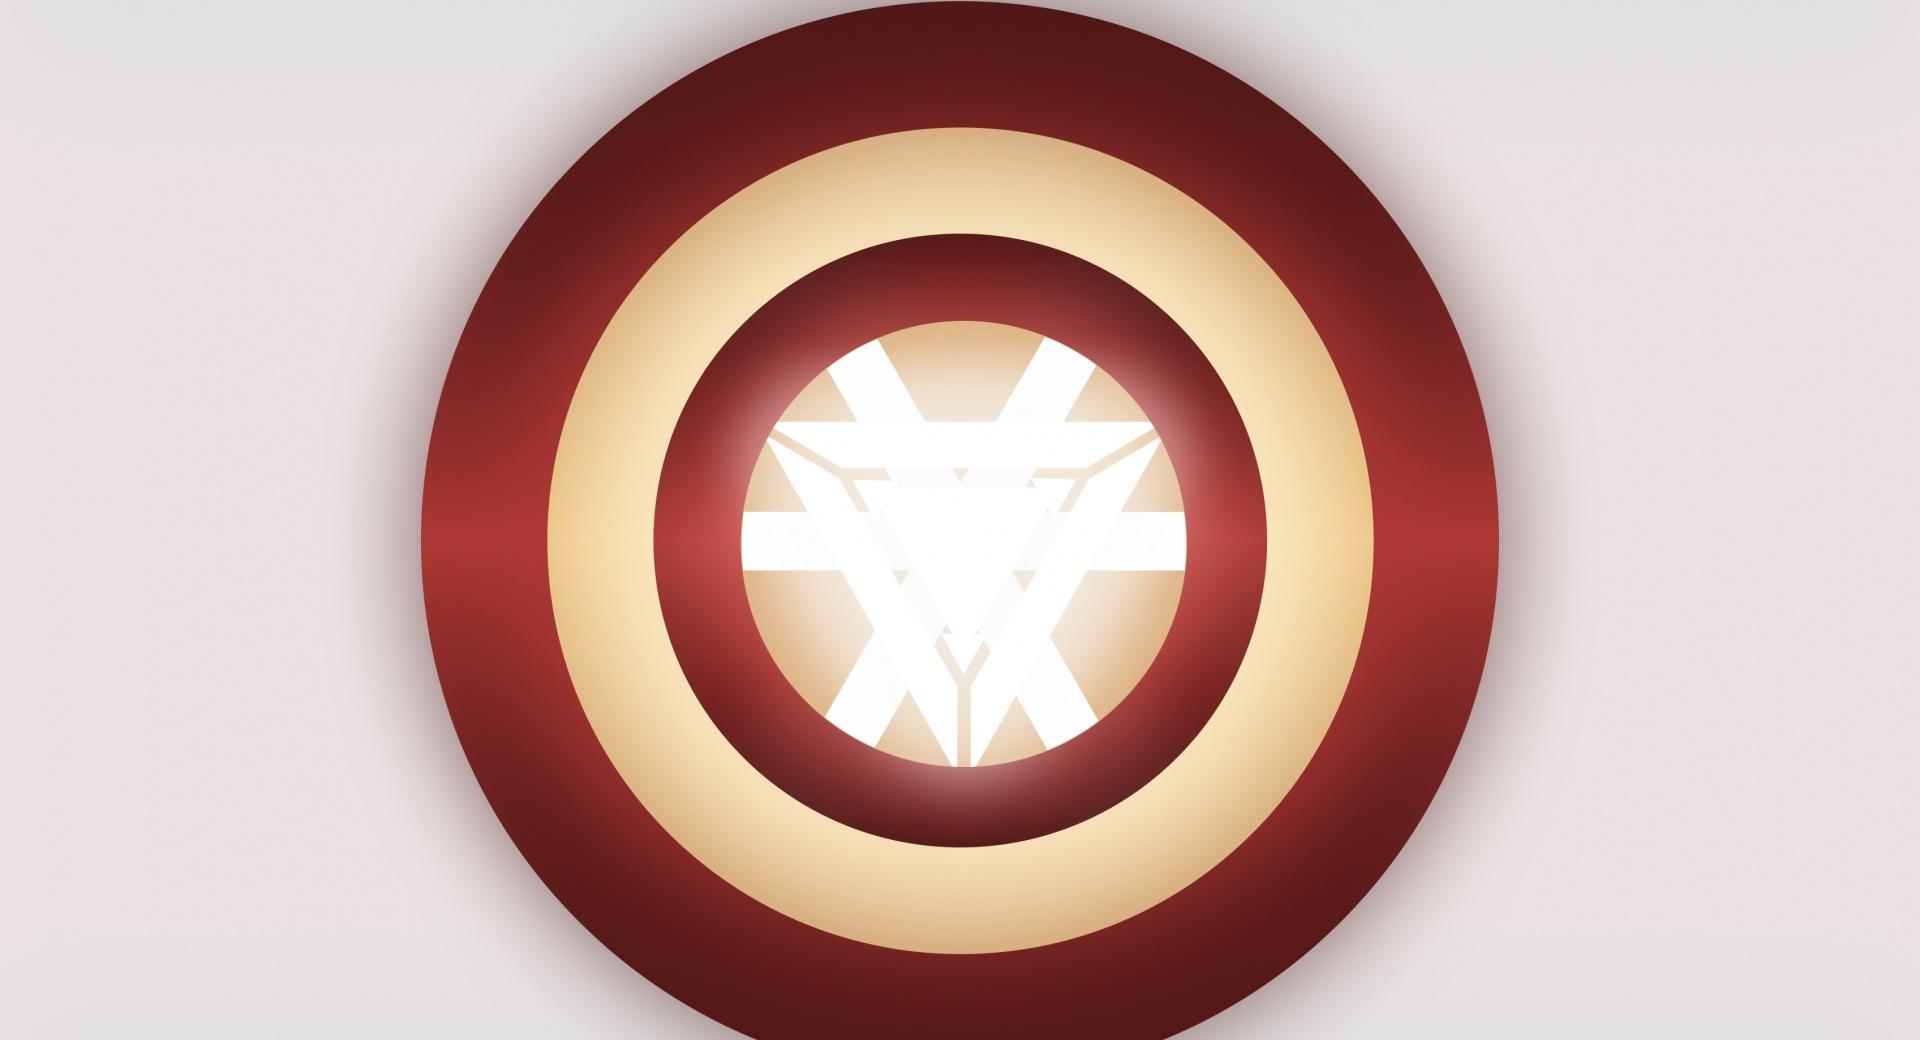 Iron Shield Captain America 3 Civil War wallpapers HD quality